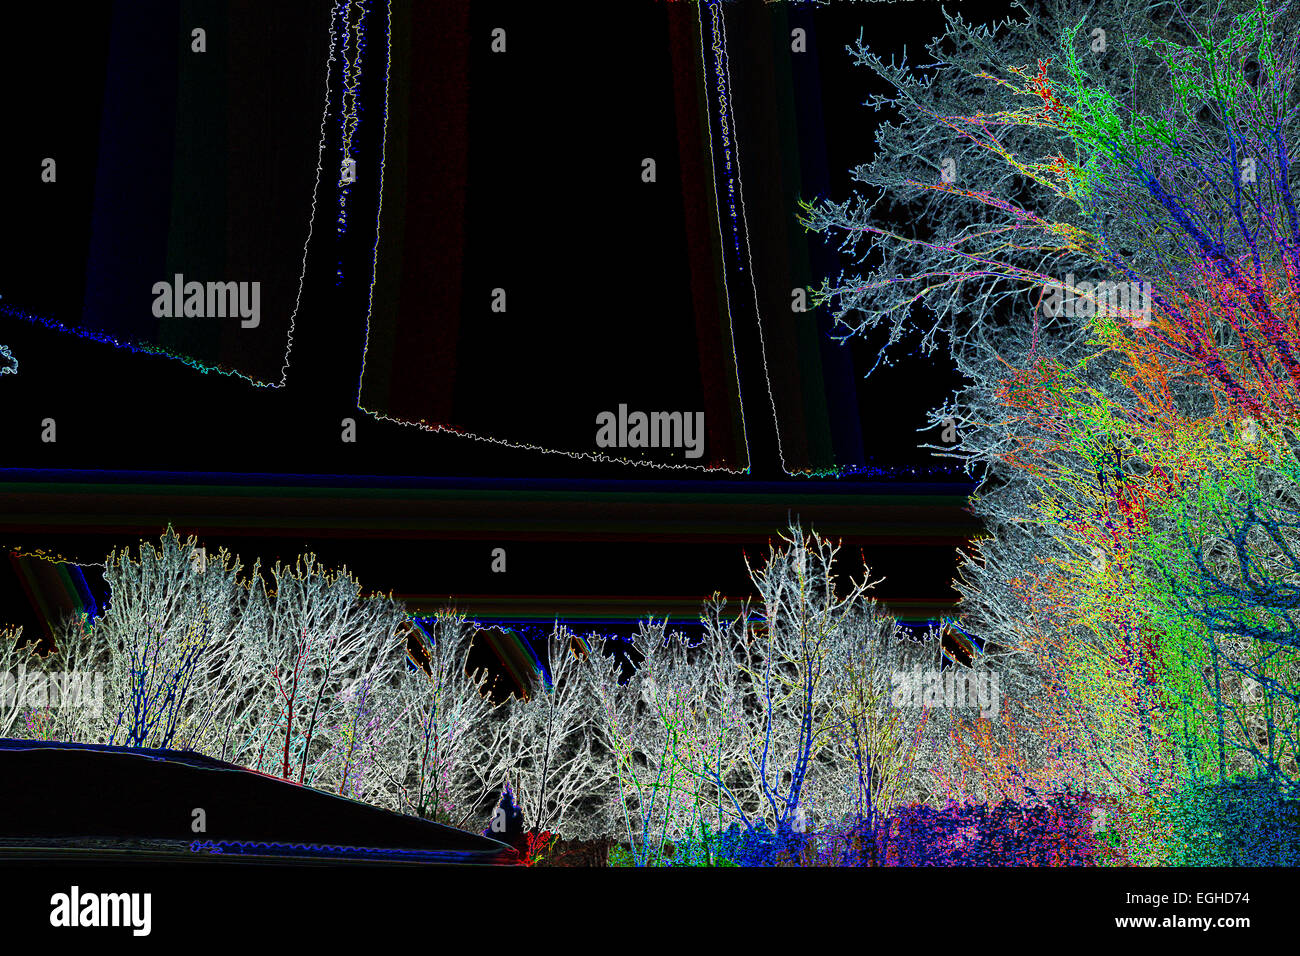 Color negro exterior digital de imagen horizontal destacados muchos noche Photoshopped polarizado árboles árboles árbol exterior edificio Foto de stock